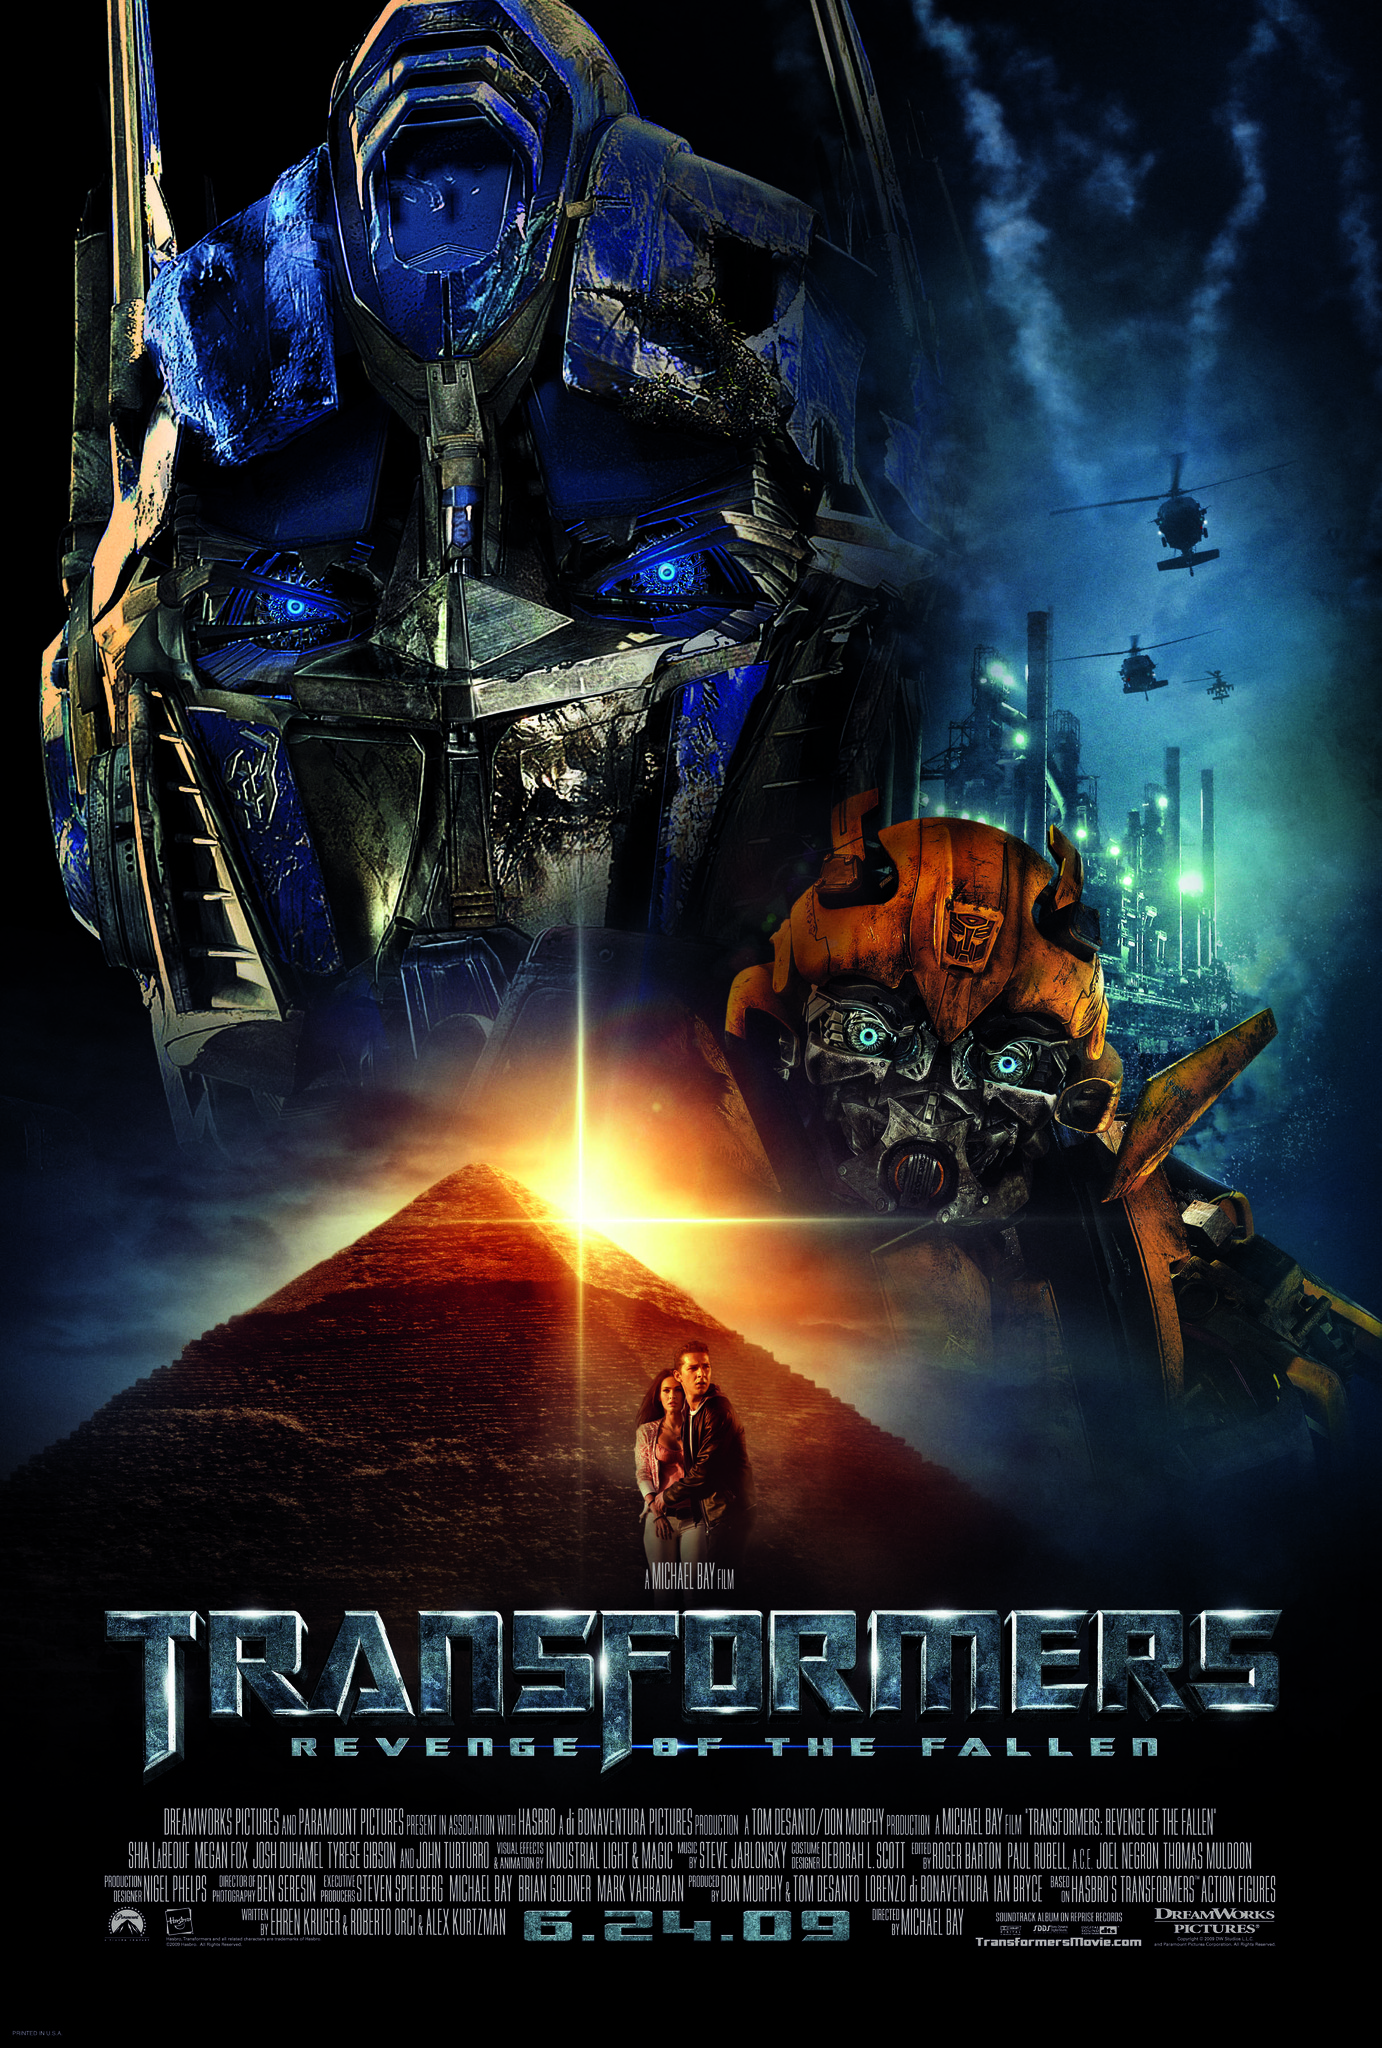 Transformers 2 Revenge of The Fallen (2009) ทรานฟอร์เมอร์ส มหาสงครามล้างแค้น Shia LaBeouf